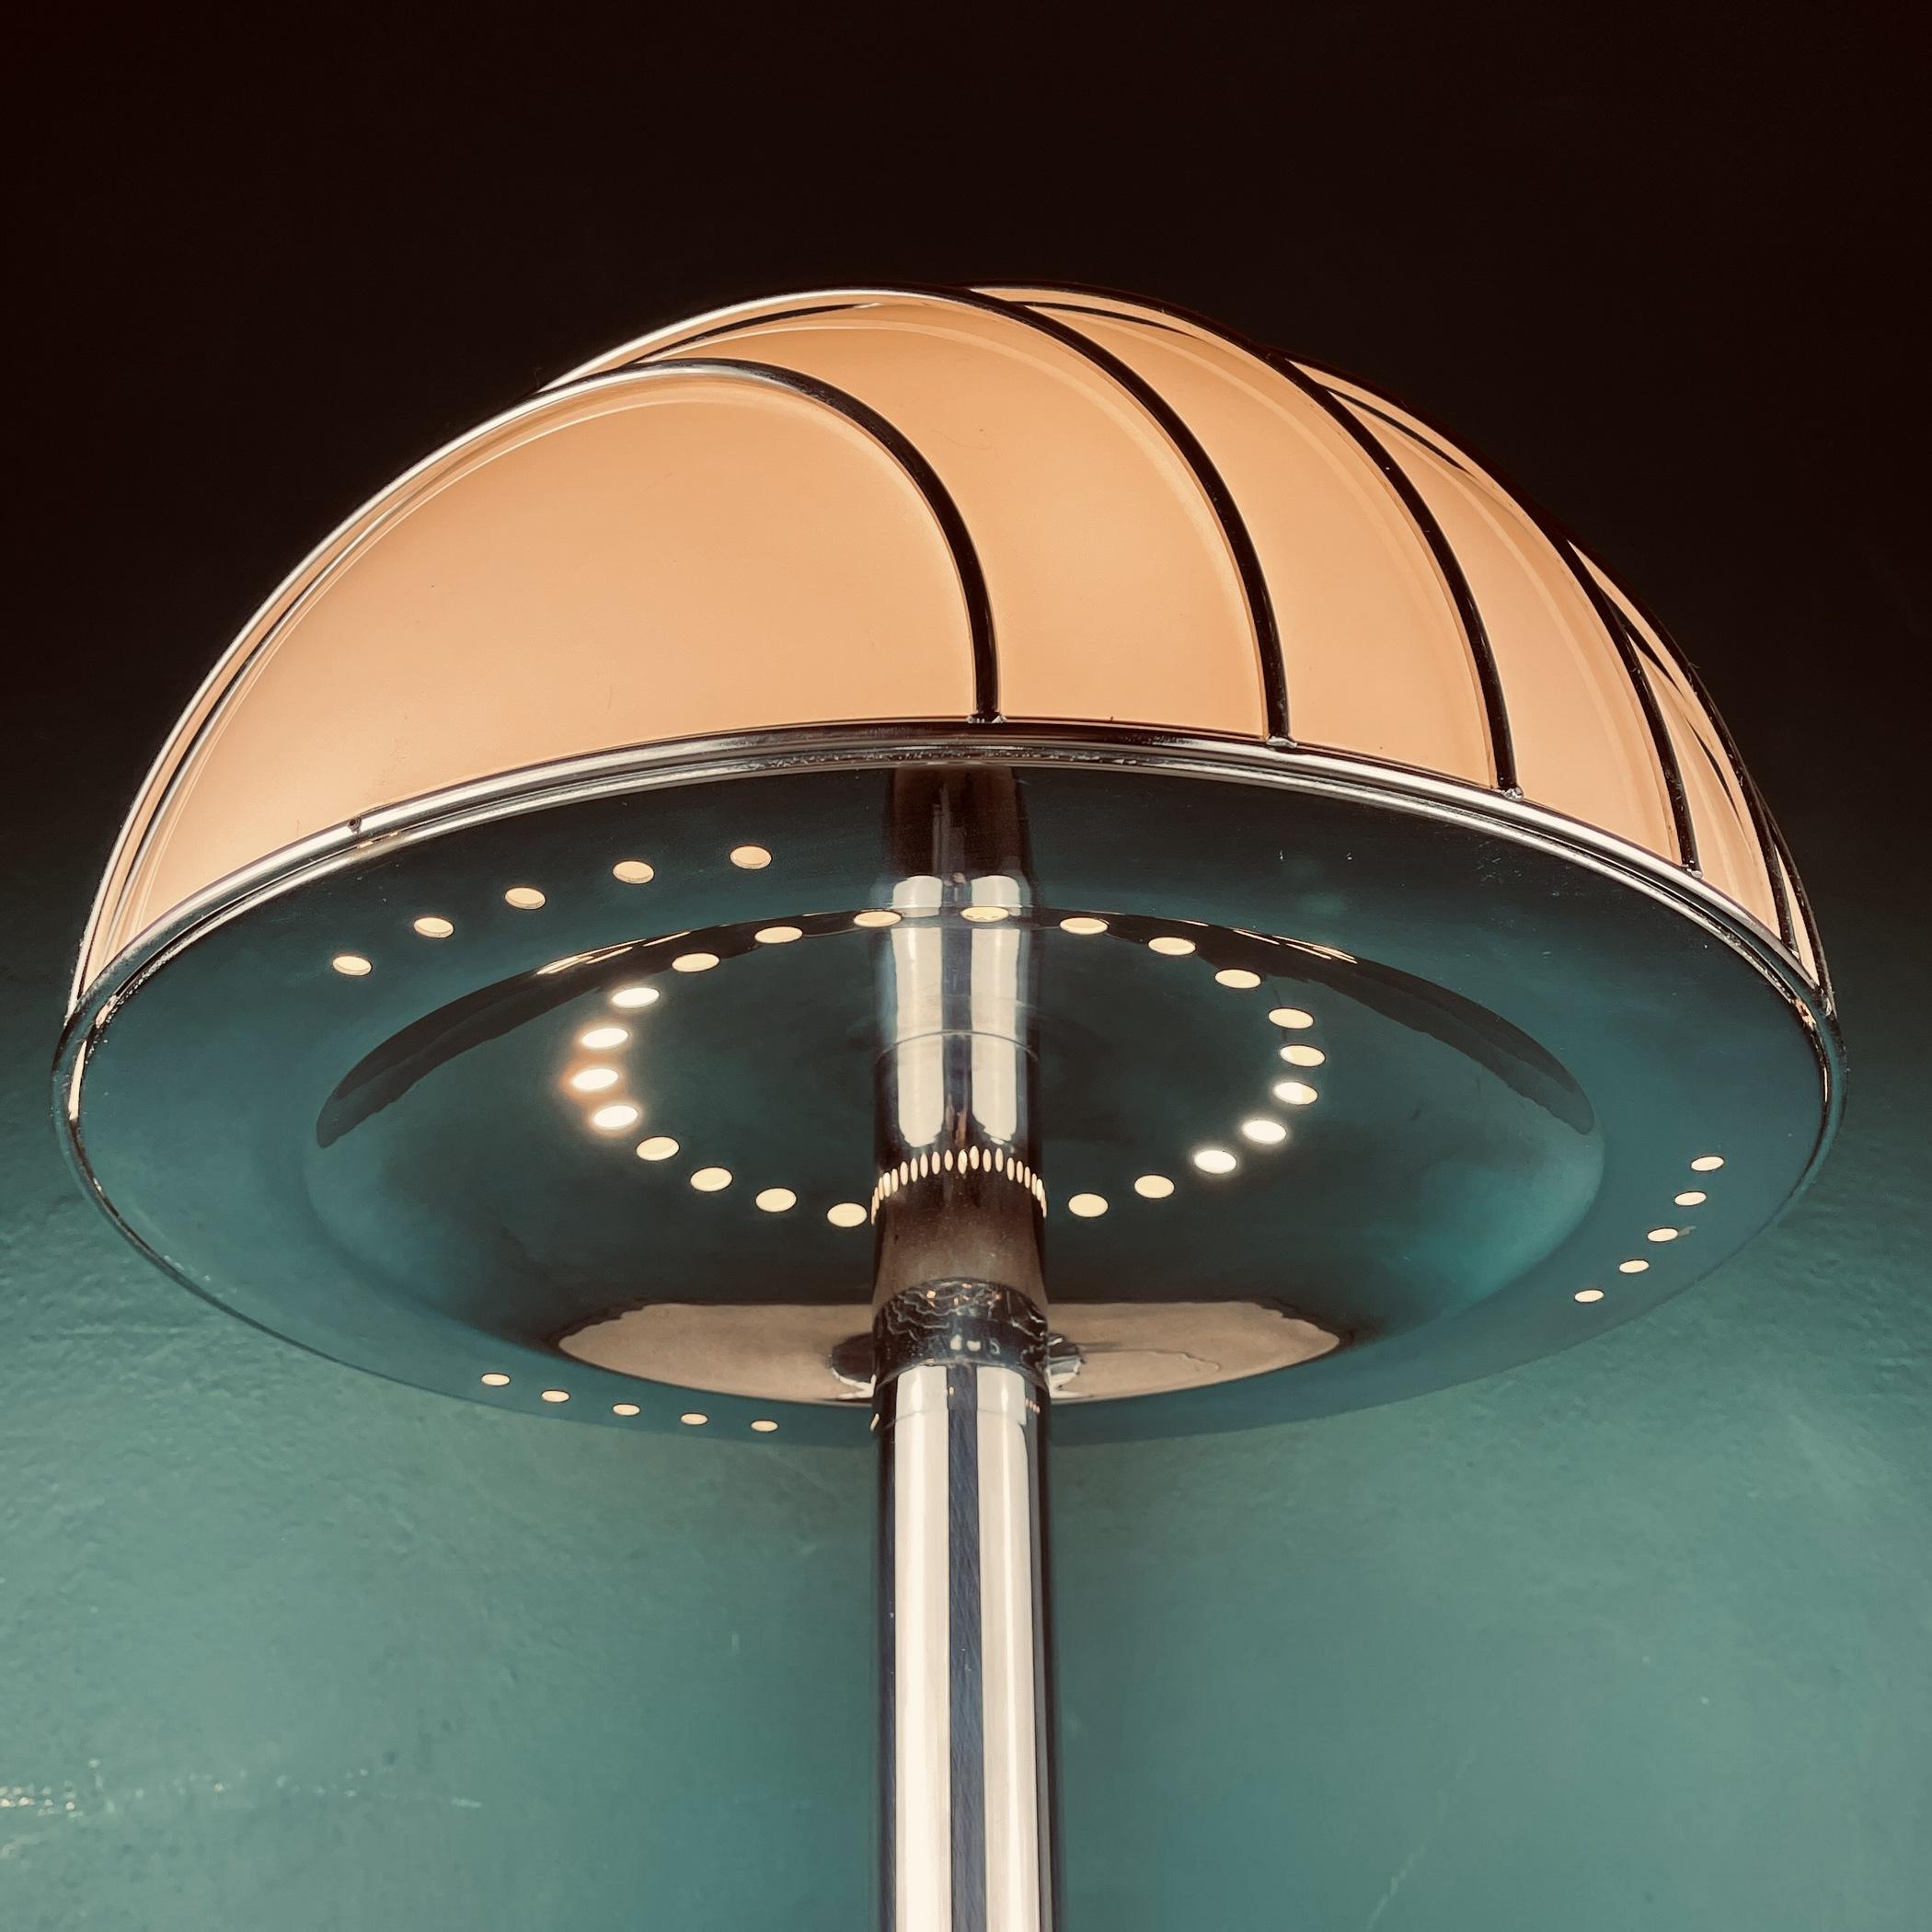 Mid-Century Modern Floor Lamp by Adalberto Dal Lago for Esperia Italy 1960s For Sale 5